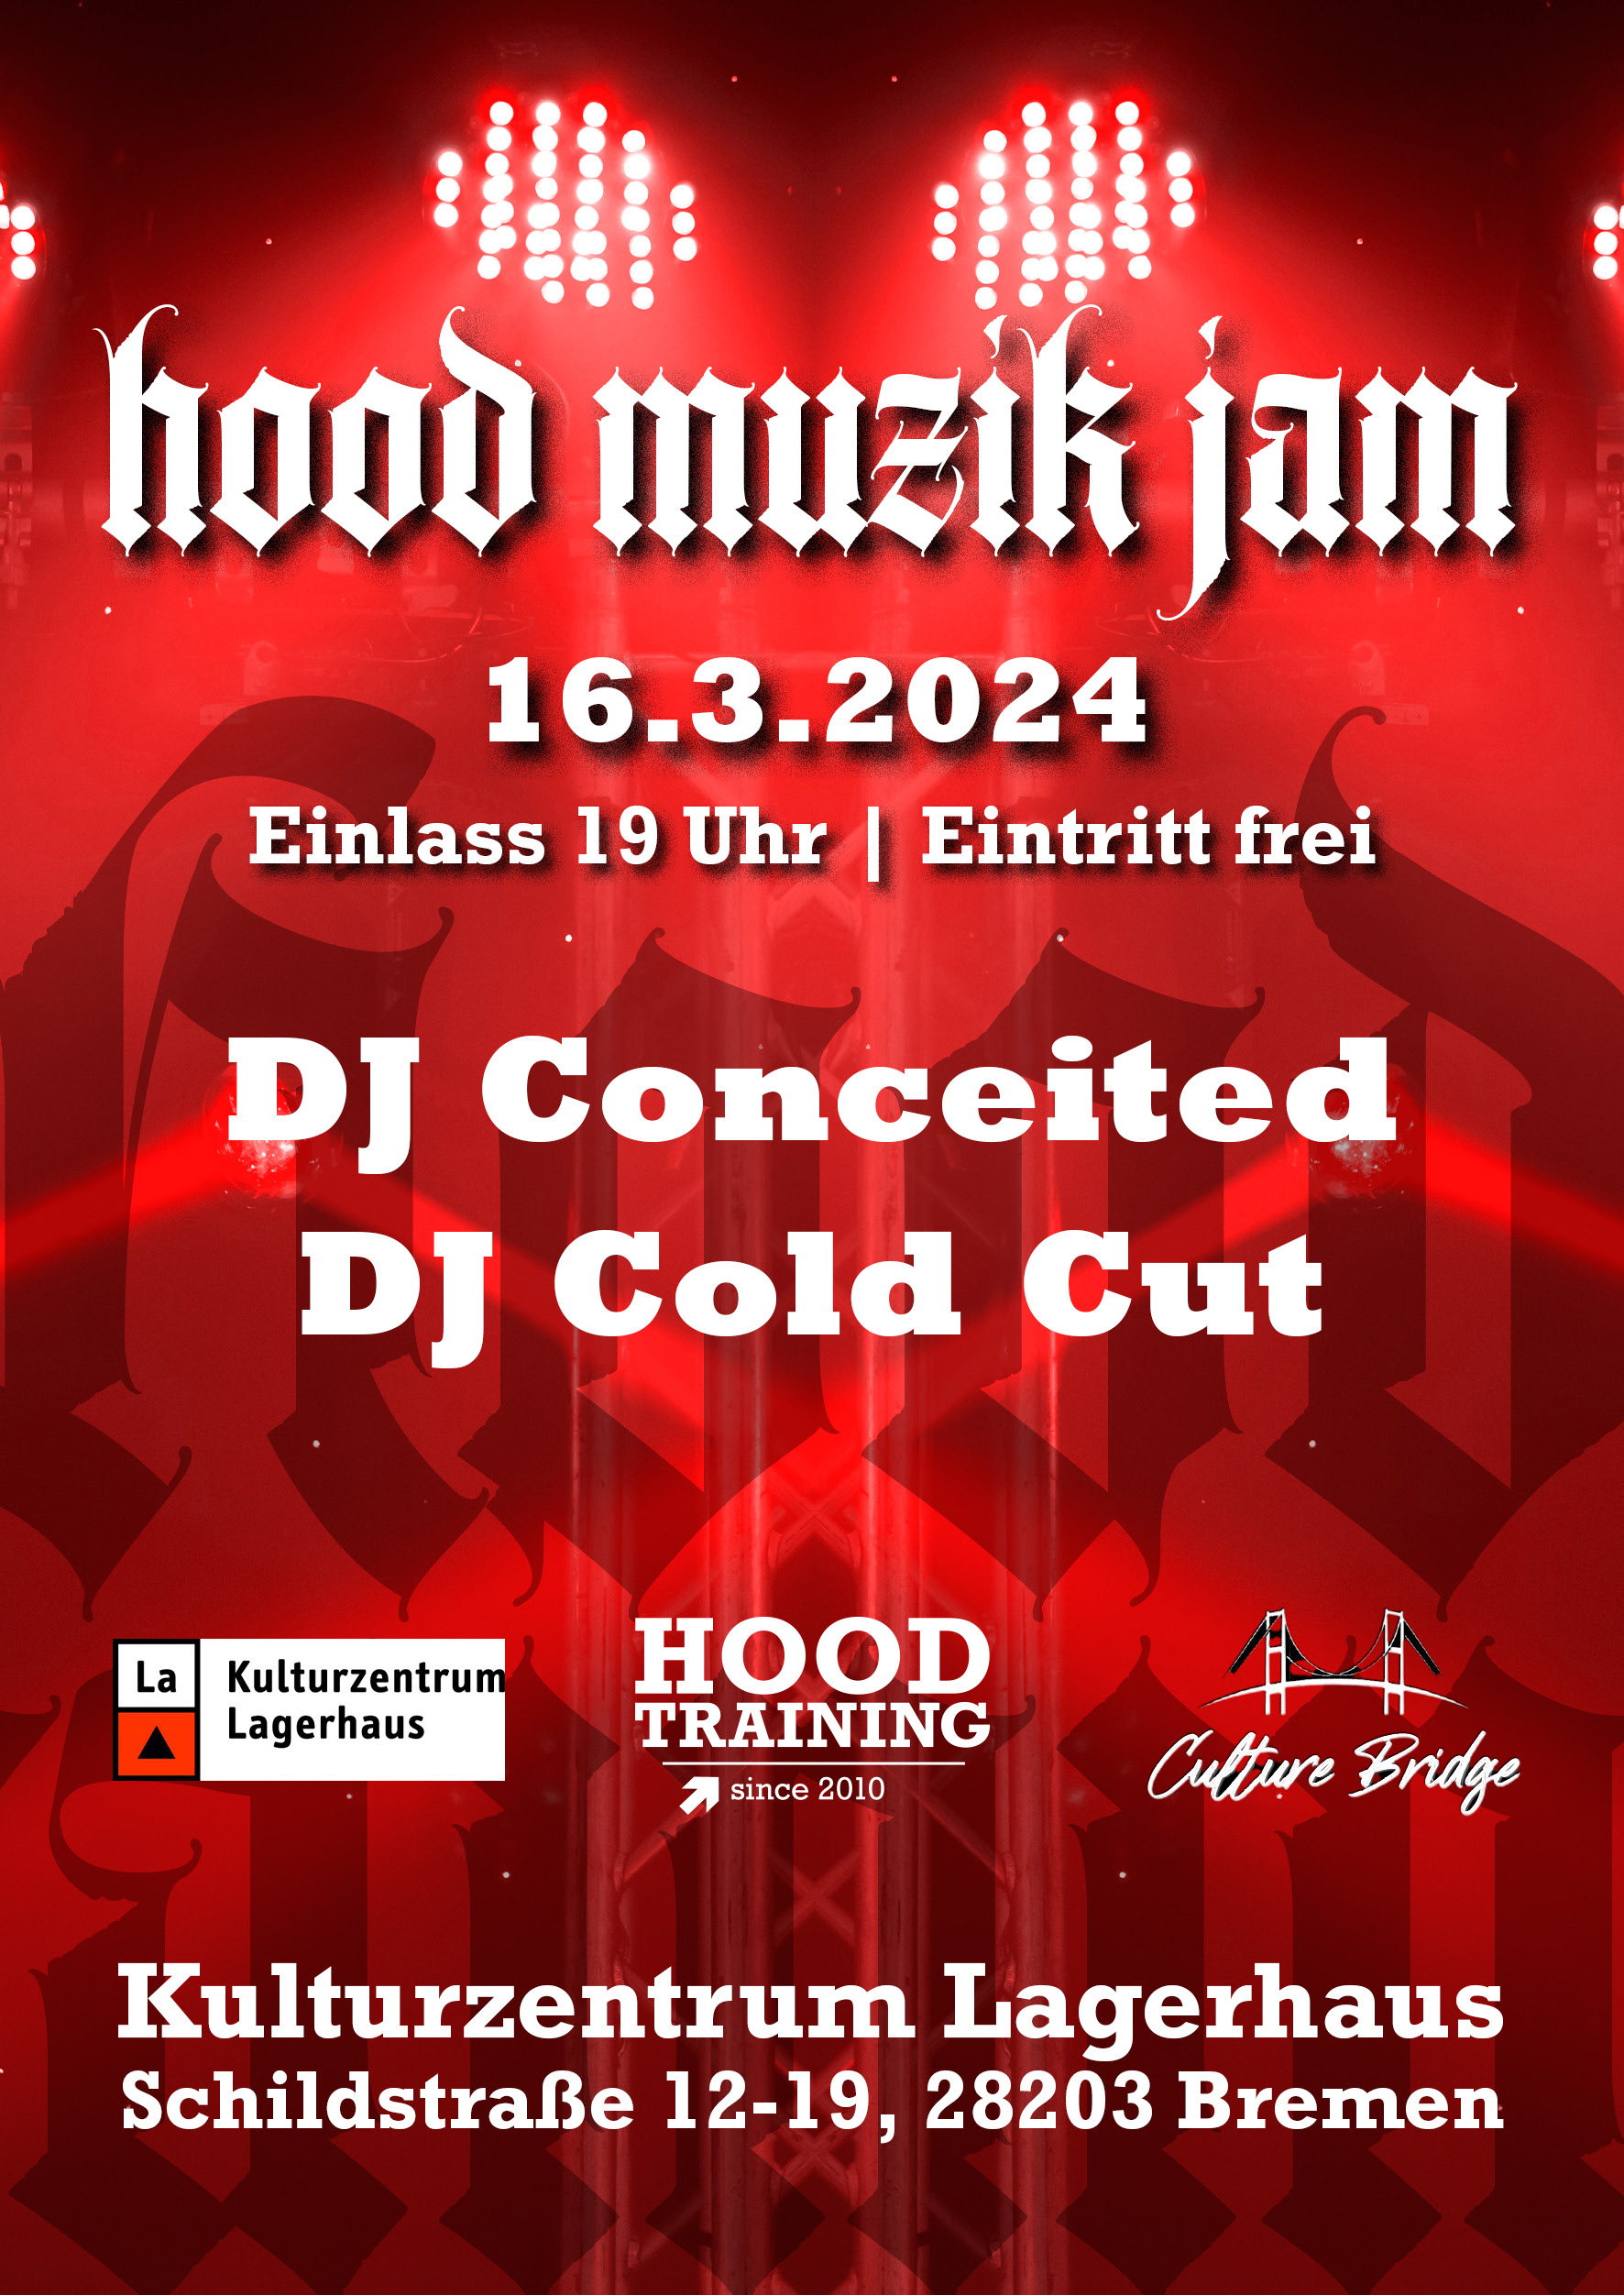 Hood Training Flyer für die Hood Muzik Jam